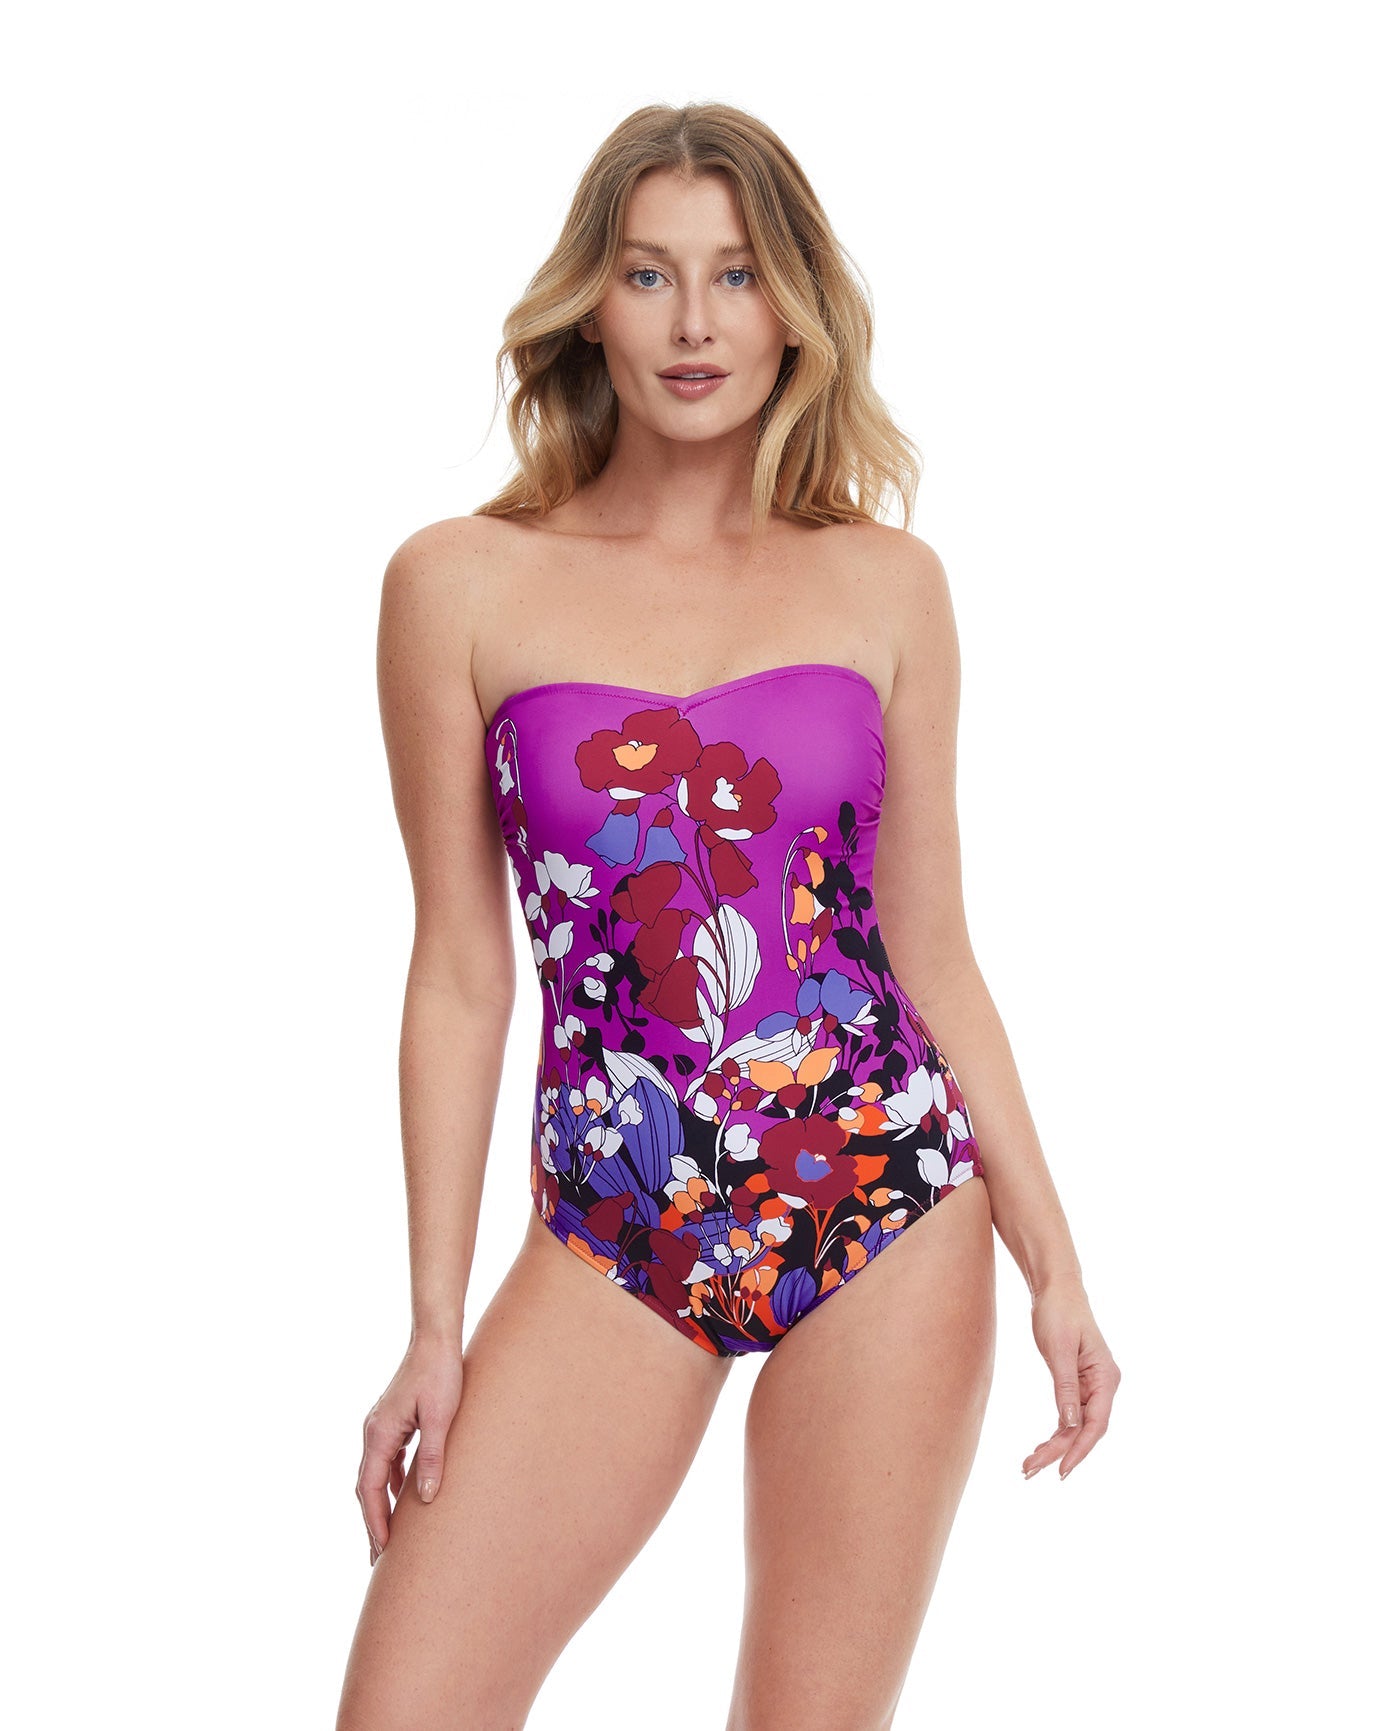 Front View Of Gottex Essentials Floral Art Shaped Bandeau Strapless One Piece Swimsuit | Gottex Floral Art Plum